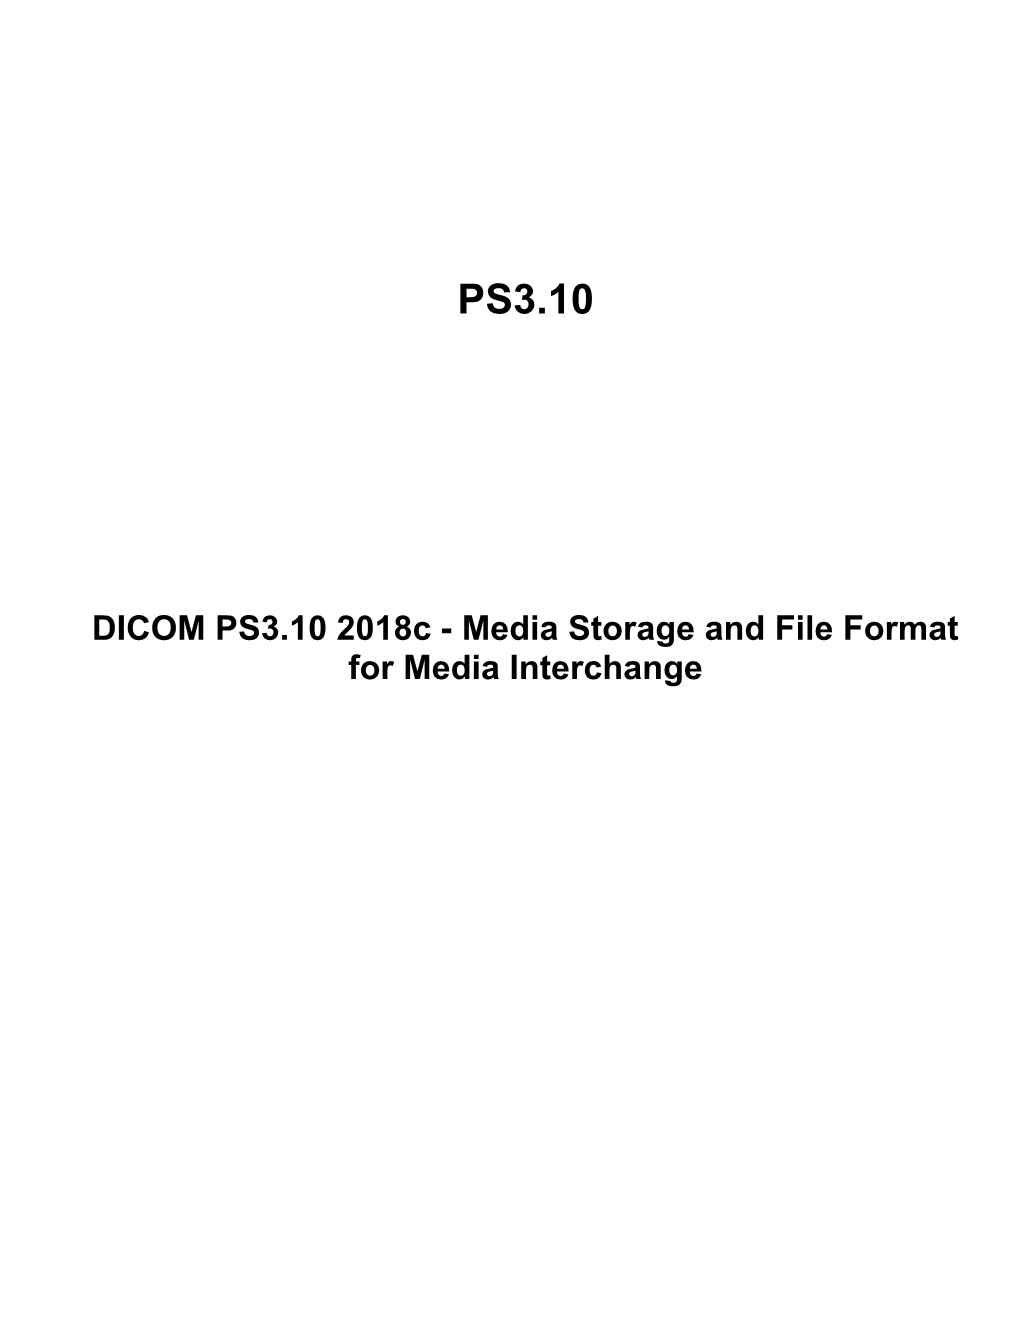 DICOM PS3.10 2018C - Media Storage and File Format for Media Interchange